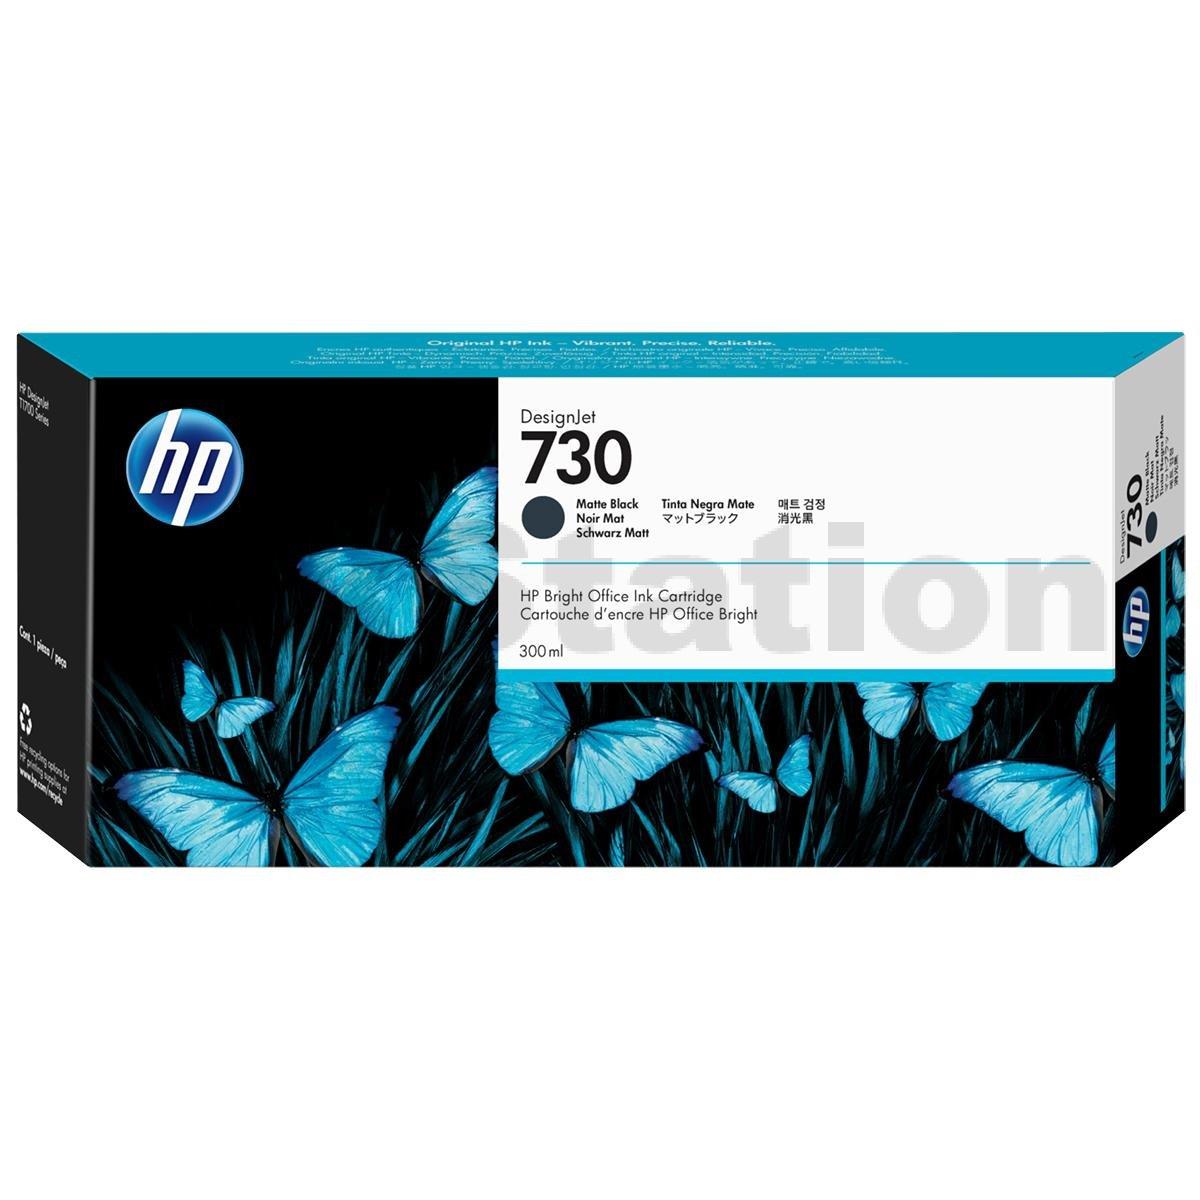 HP Designjet T1700 Matte Black Ink Cartridge